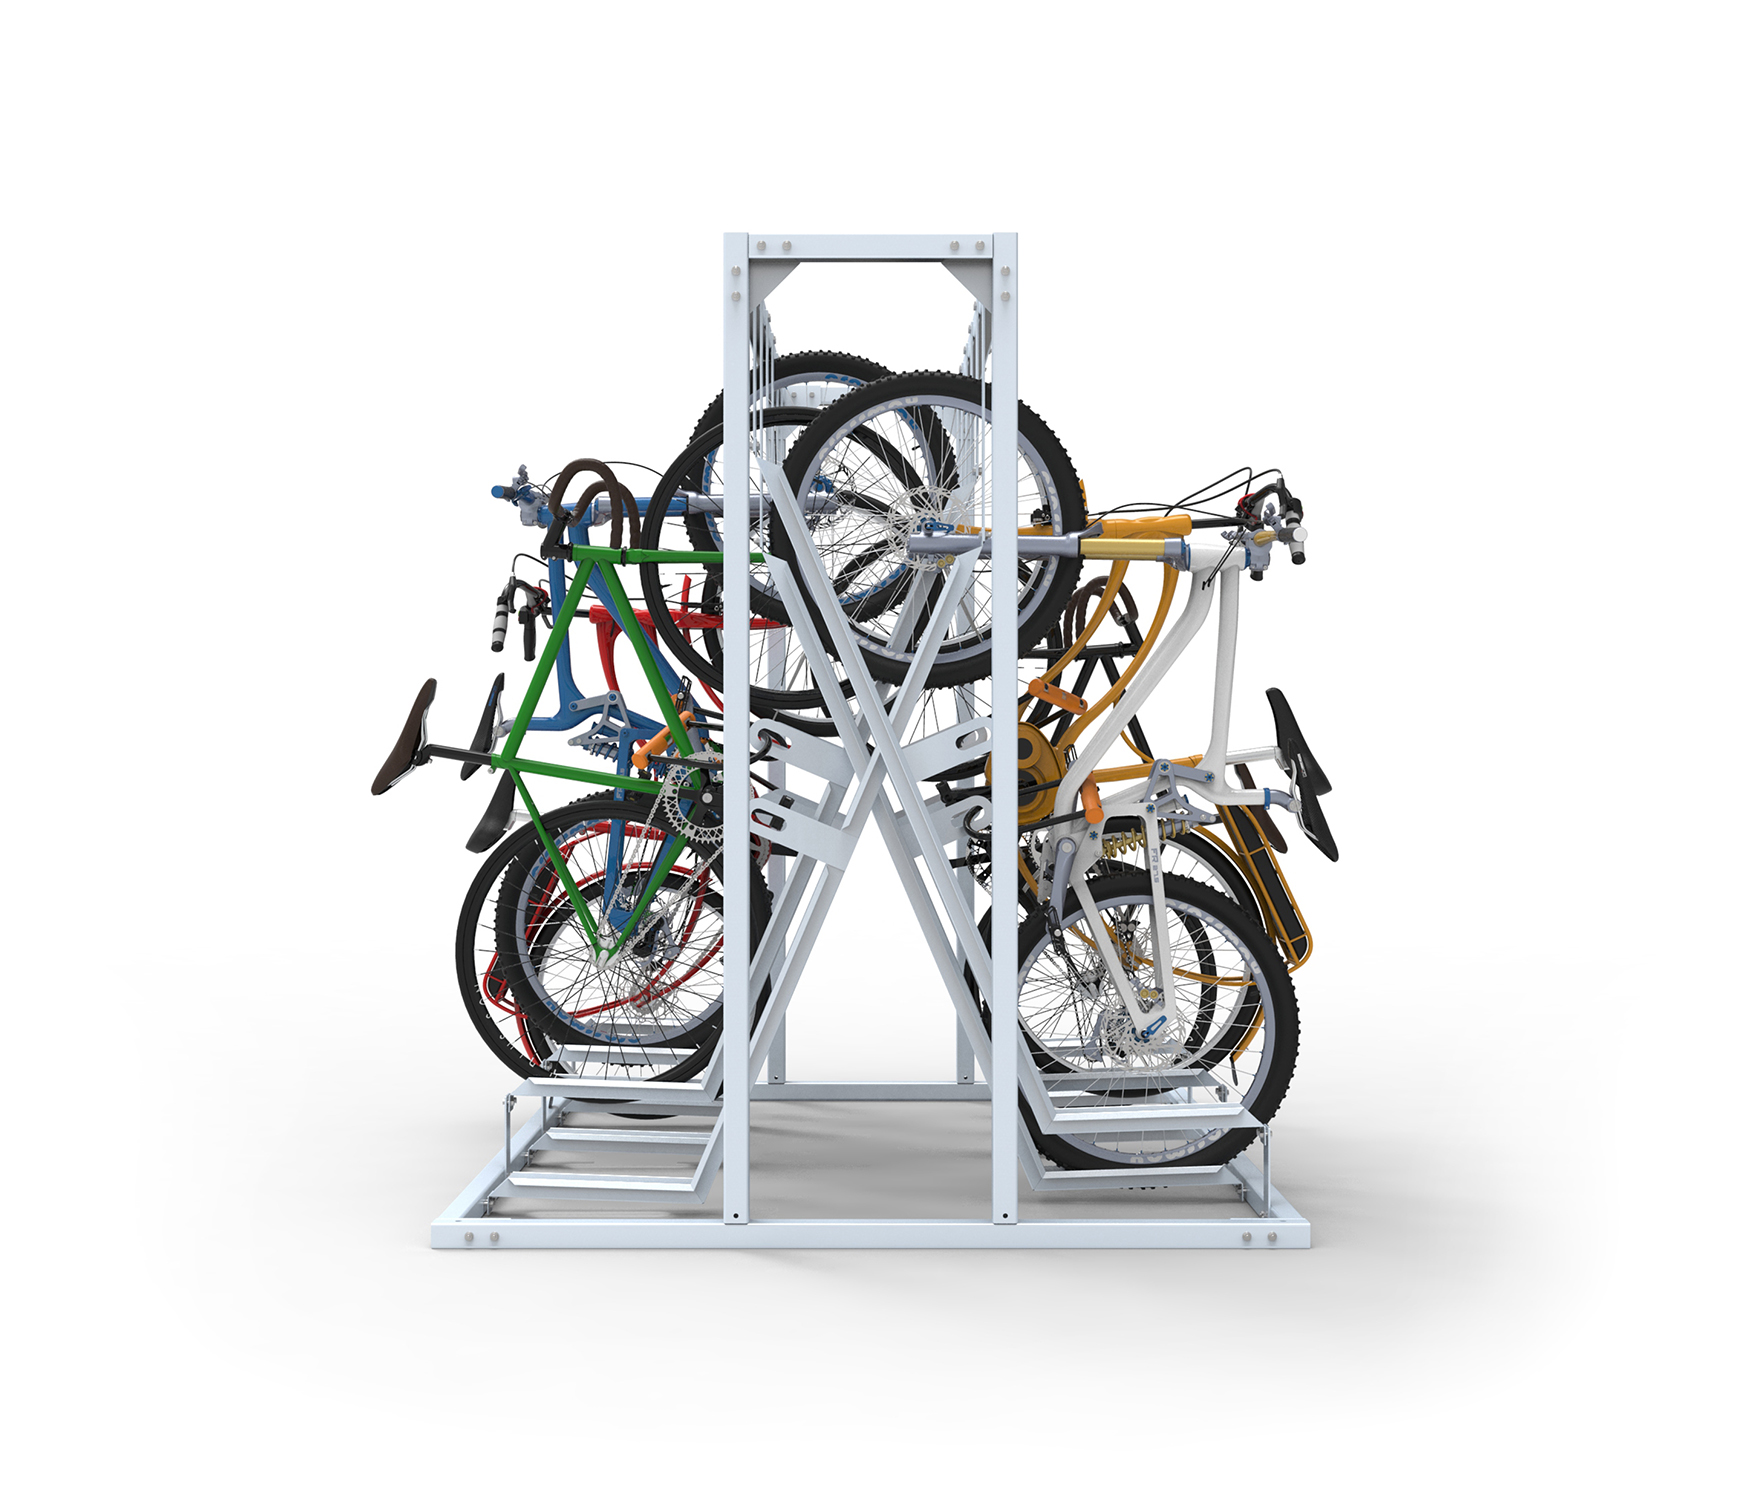 Semi vertical cycle rack: free standing